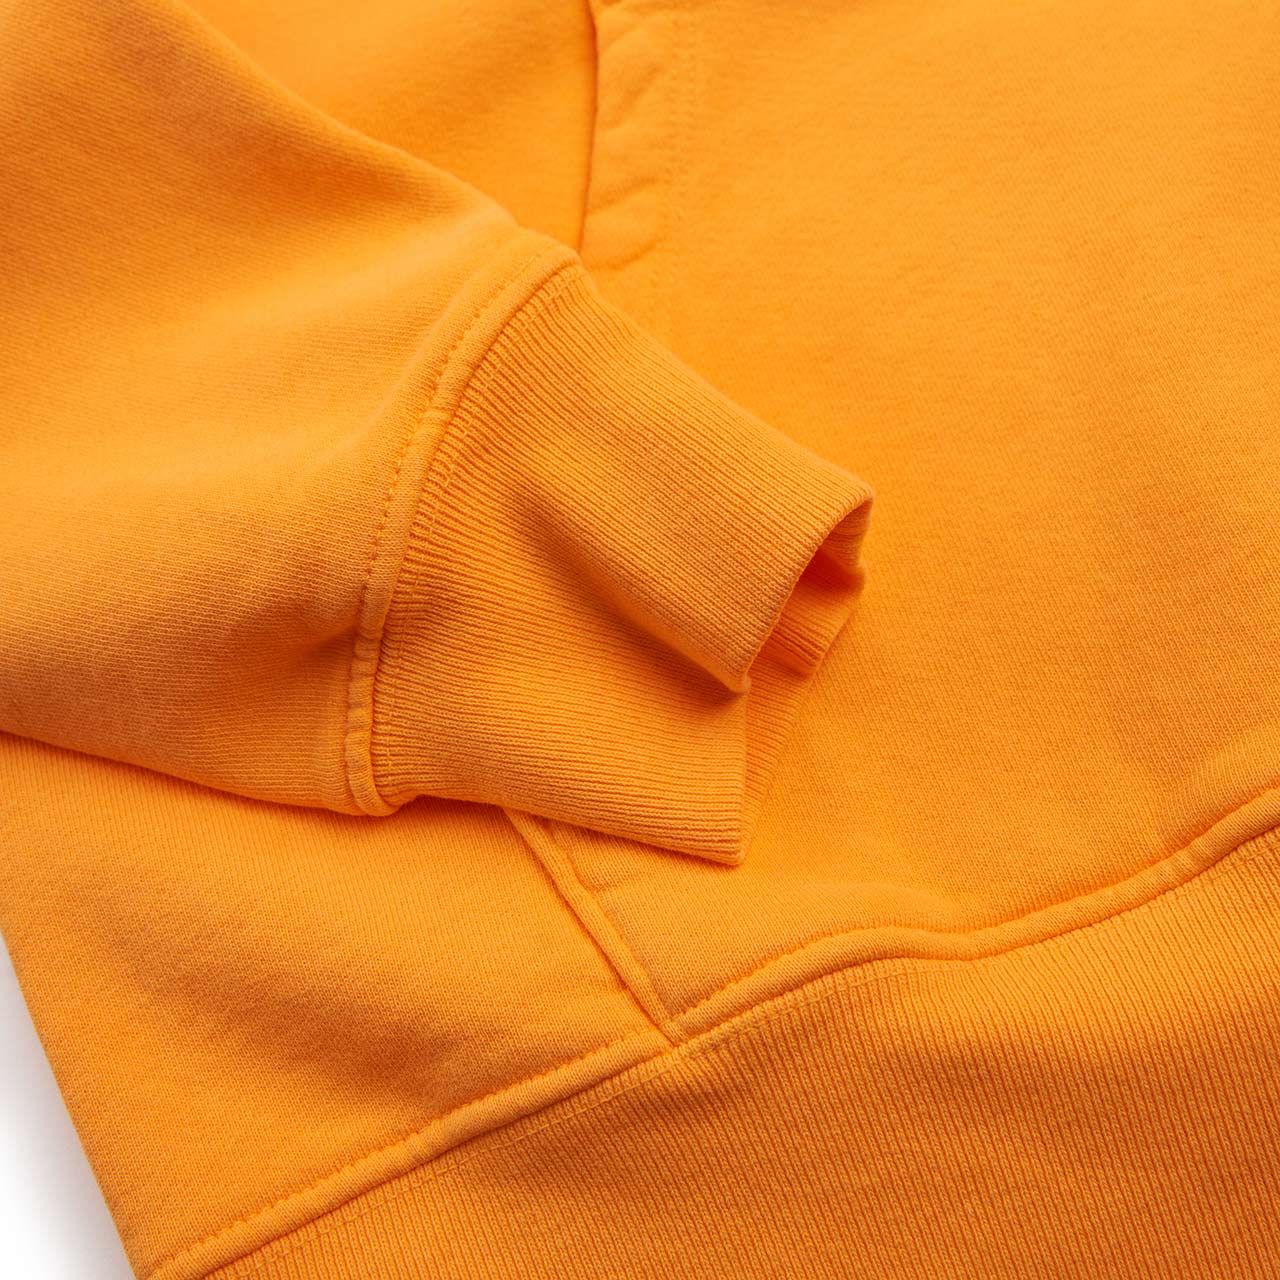 bianca chandôn yogi hooded sweat (orange)